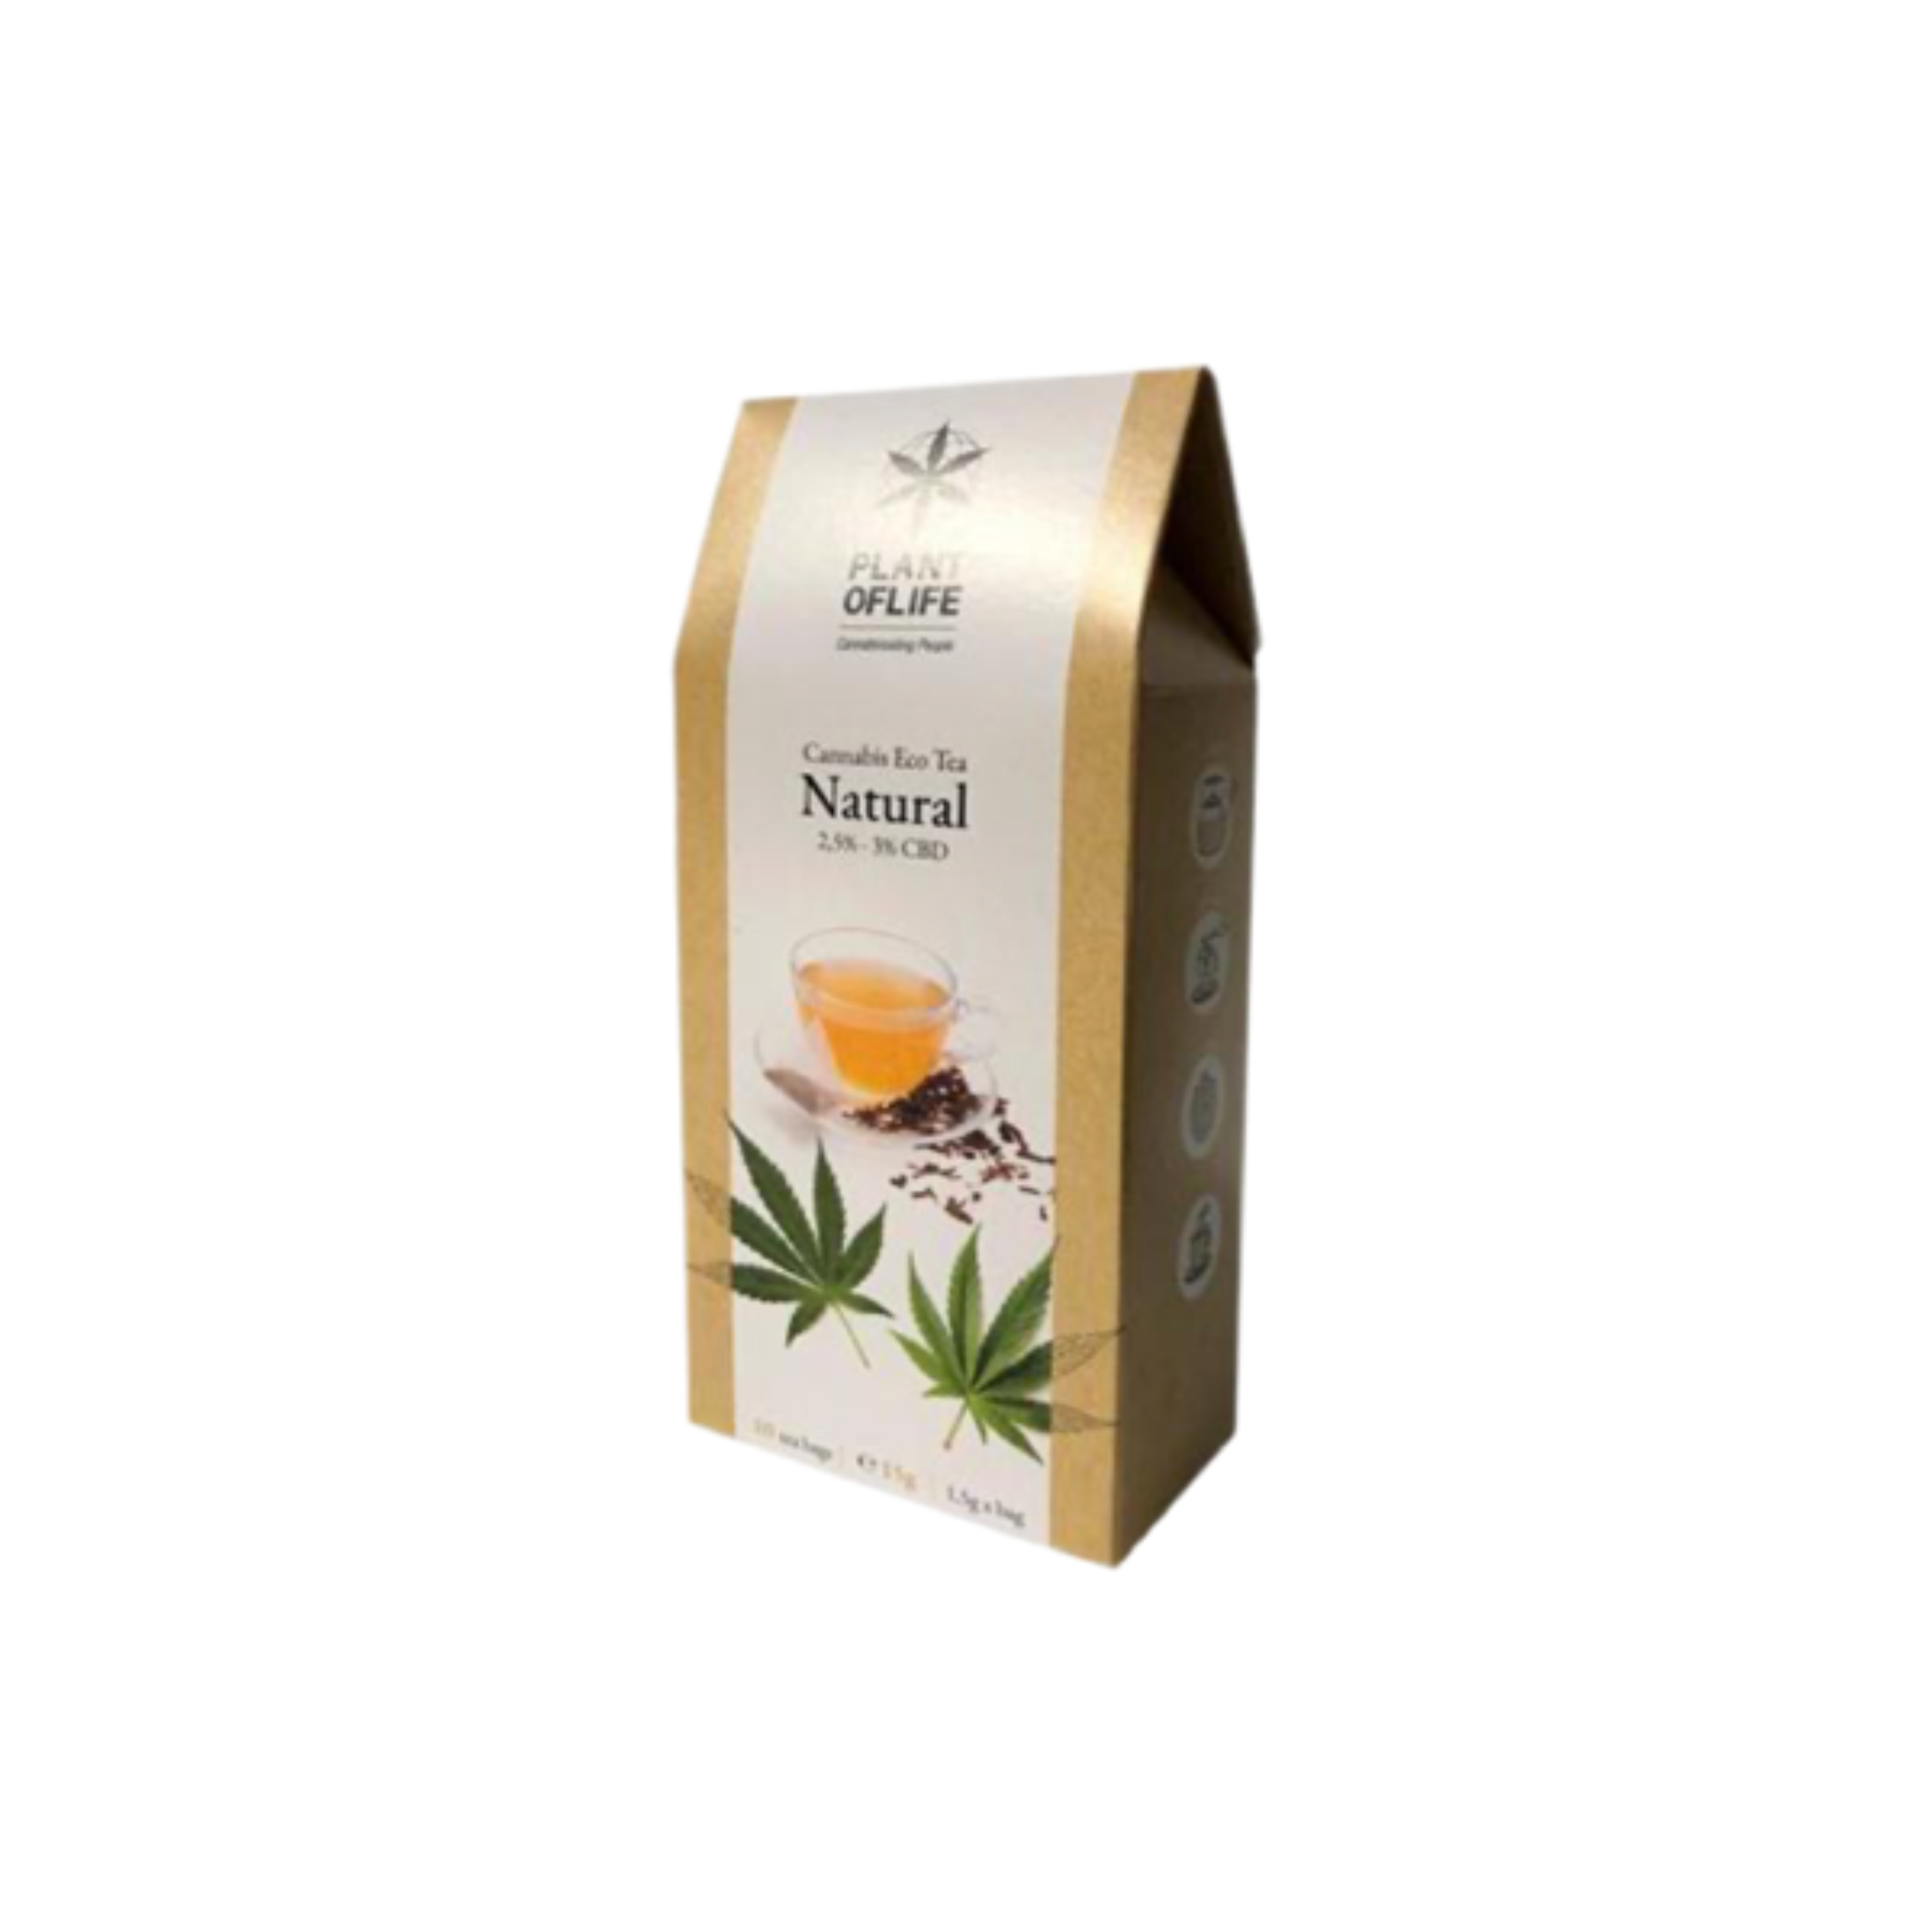 achat cbd Plant of life – Cannabis Eco Tea CBD – Natural – Bio